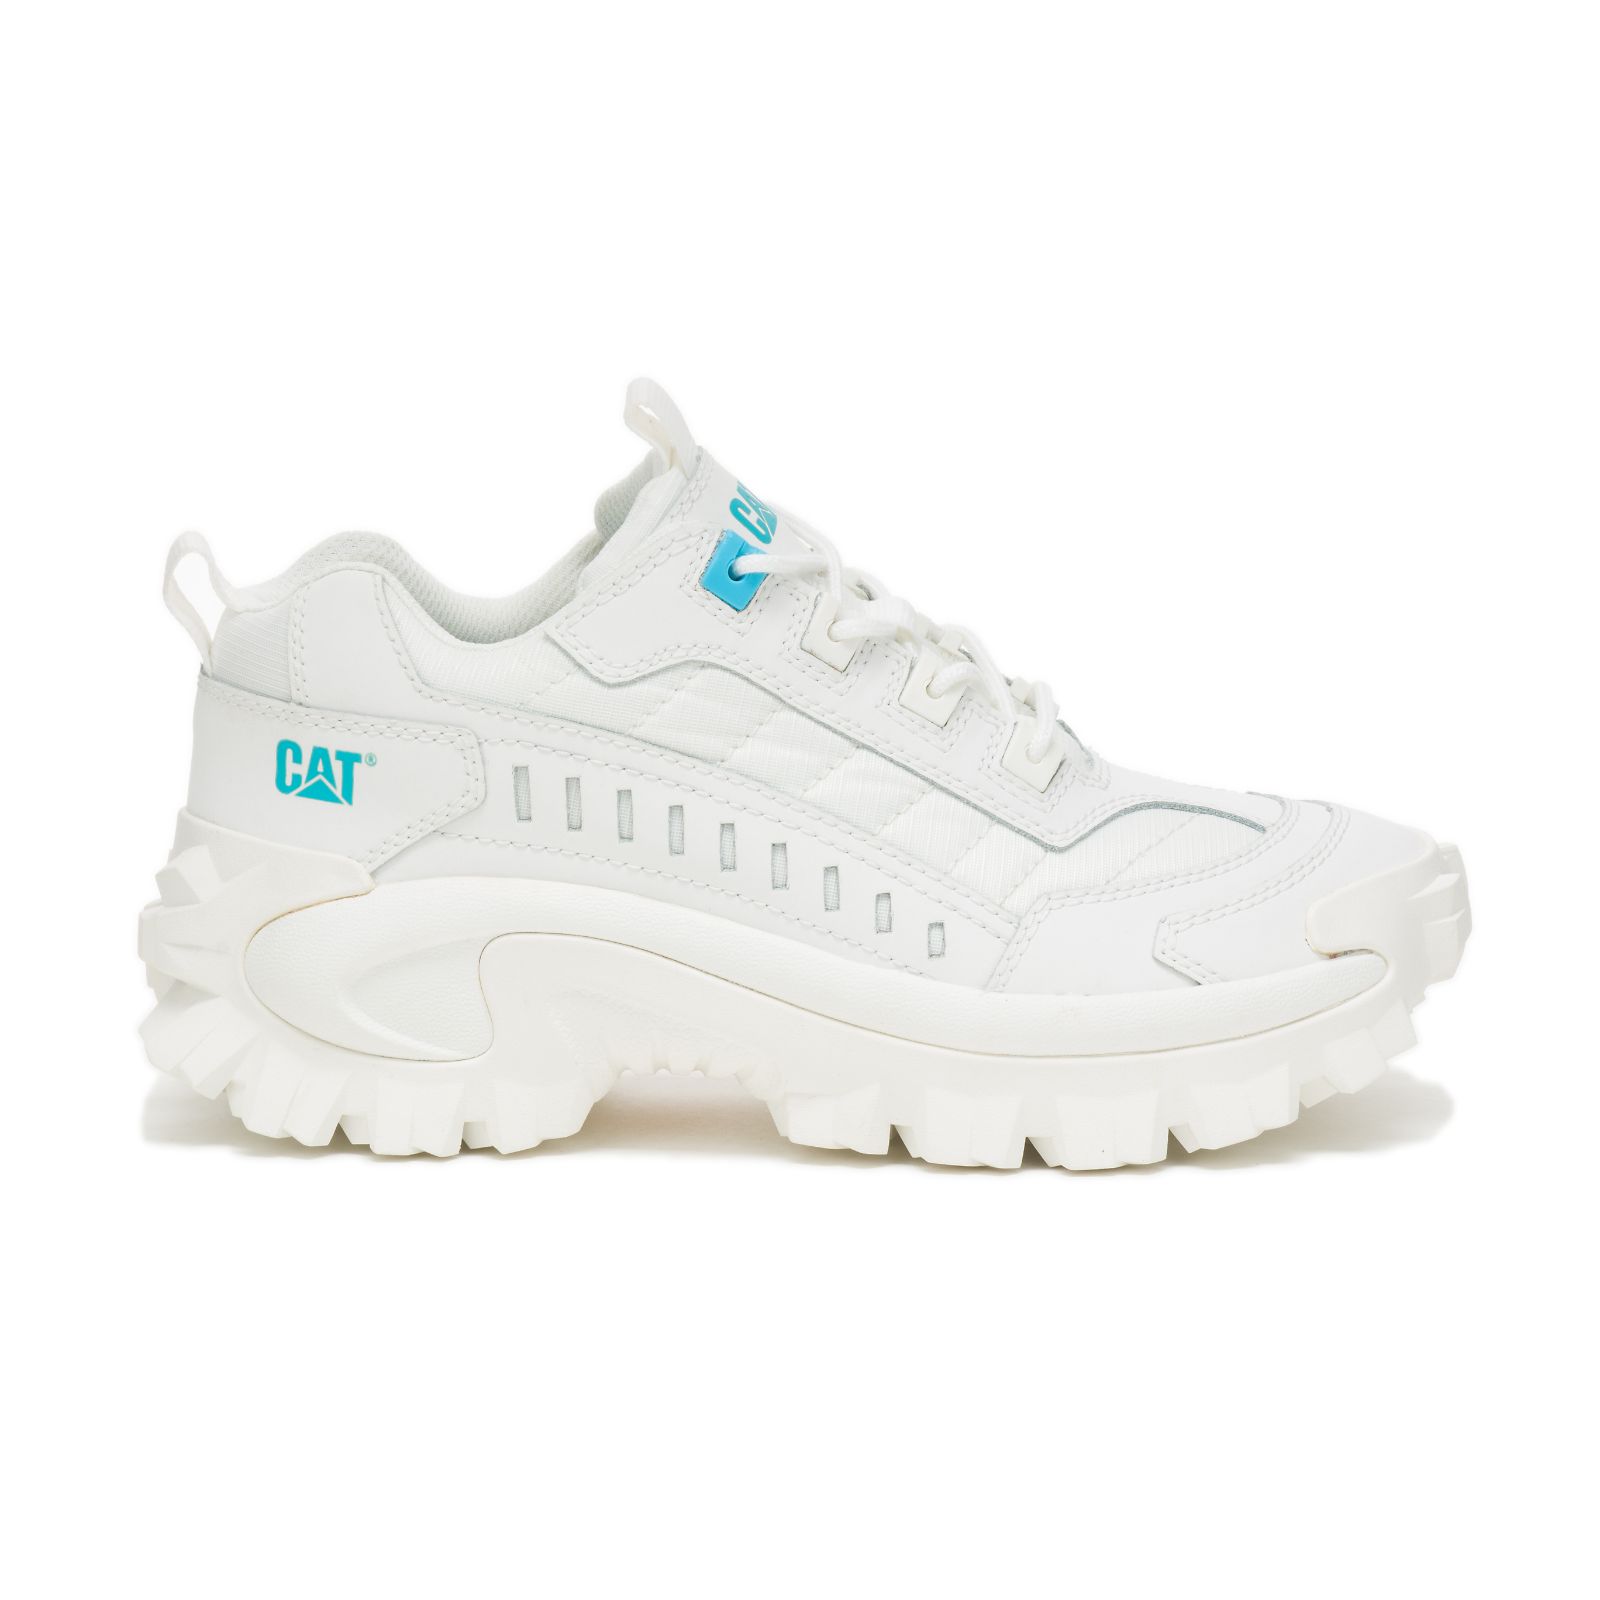 Caterpillar Shoes Islamabad - Caterpillar Intruder Mens Casual Shoes White/Blue (768503-IYG)